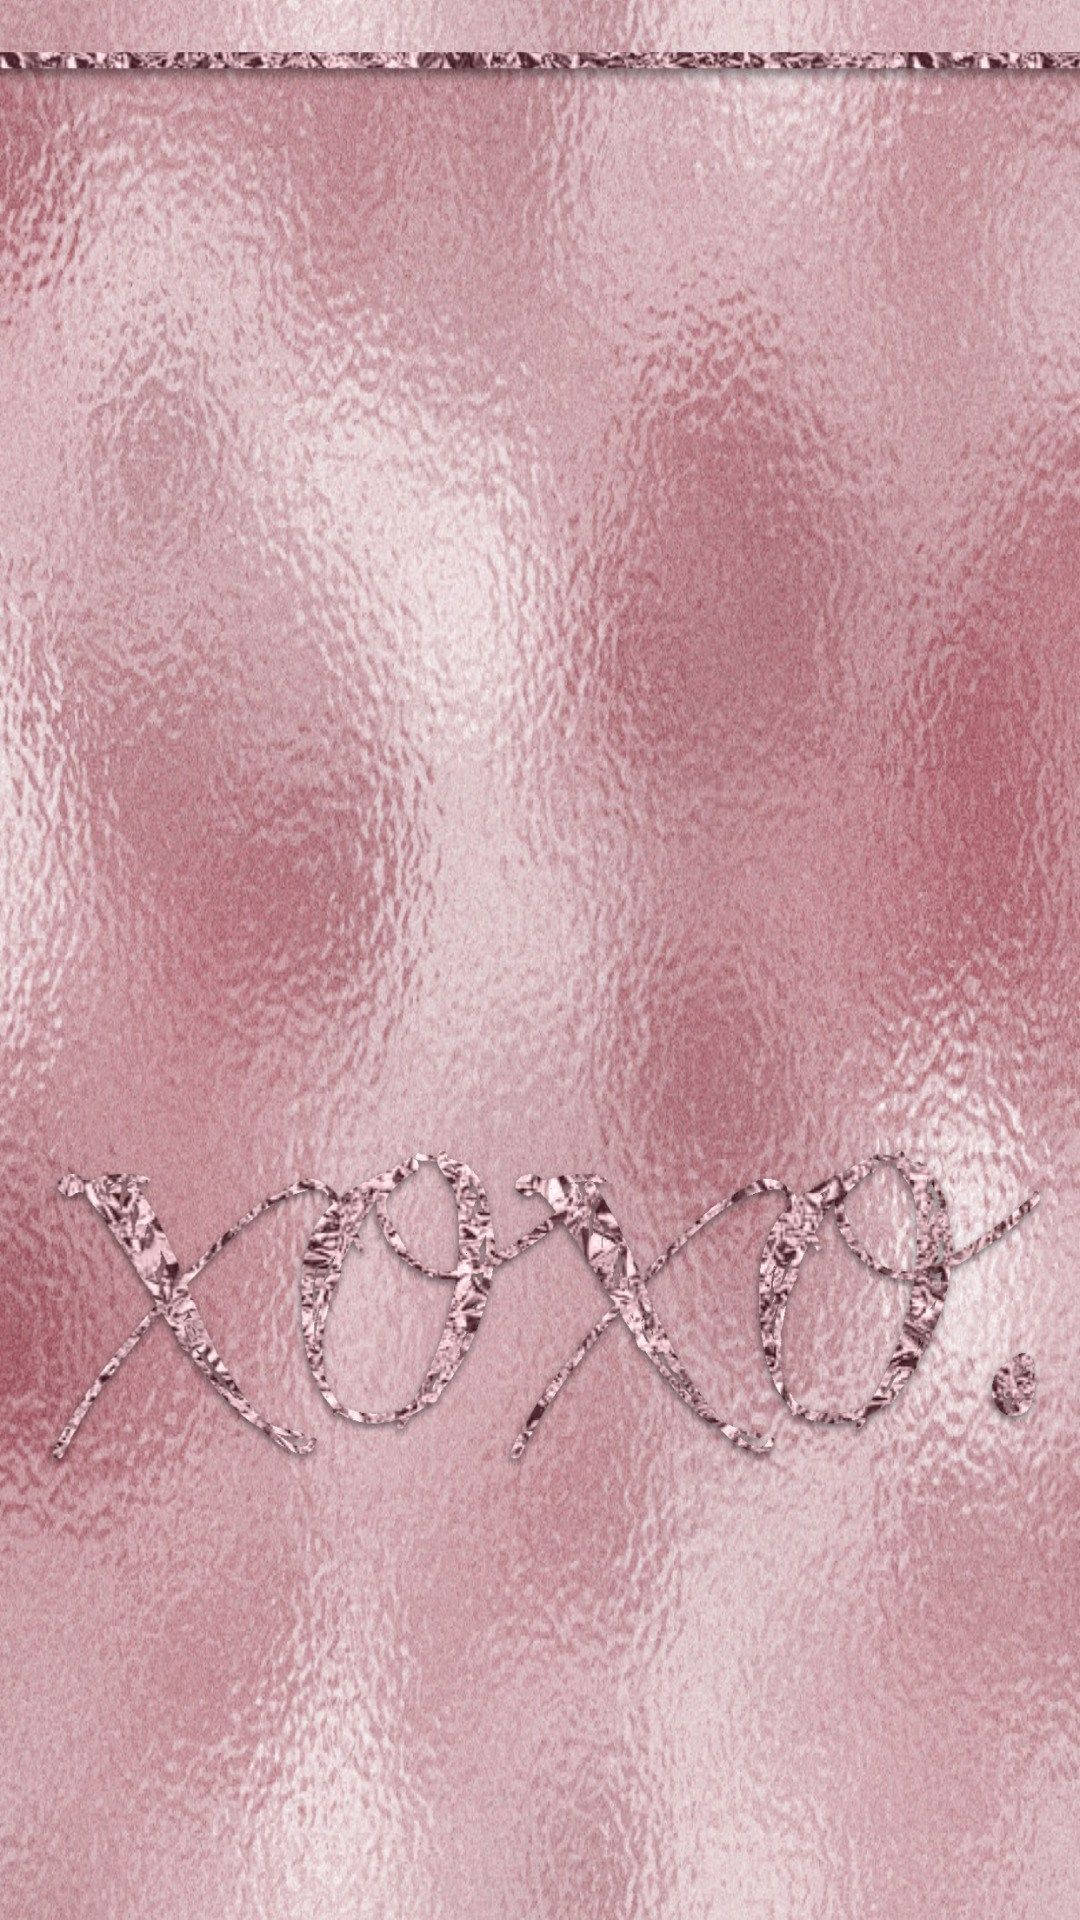 Xoxo Leather Rose Gold Tumblr Wallpaper